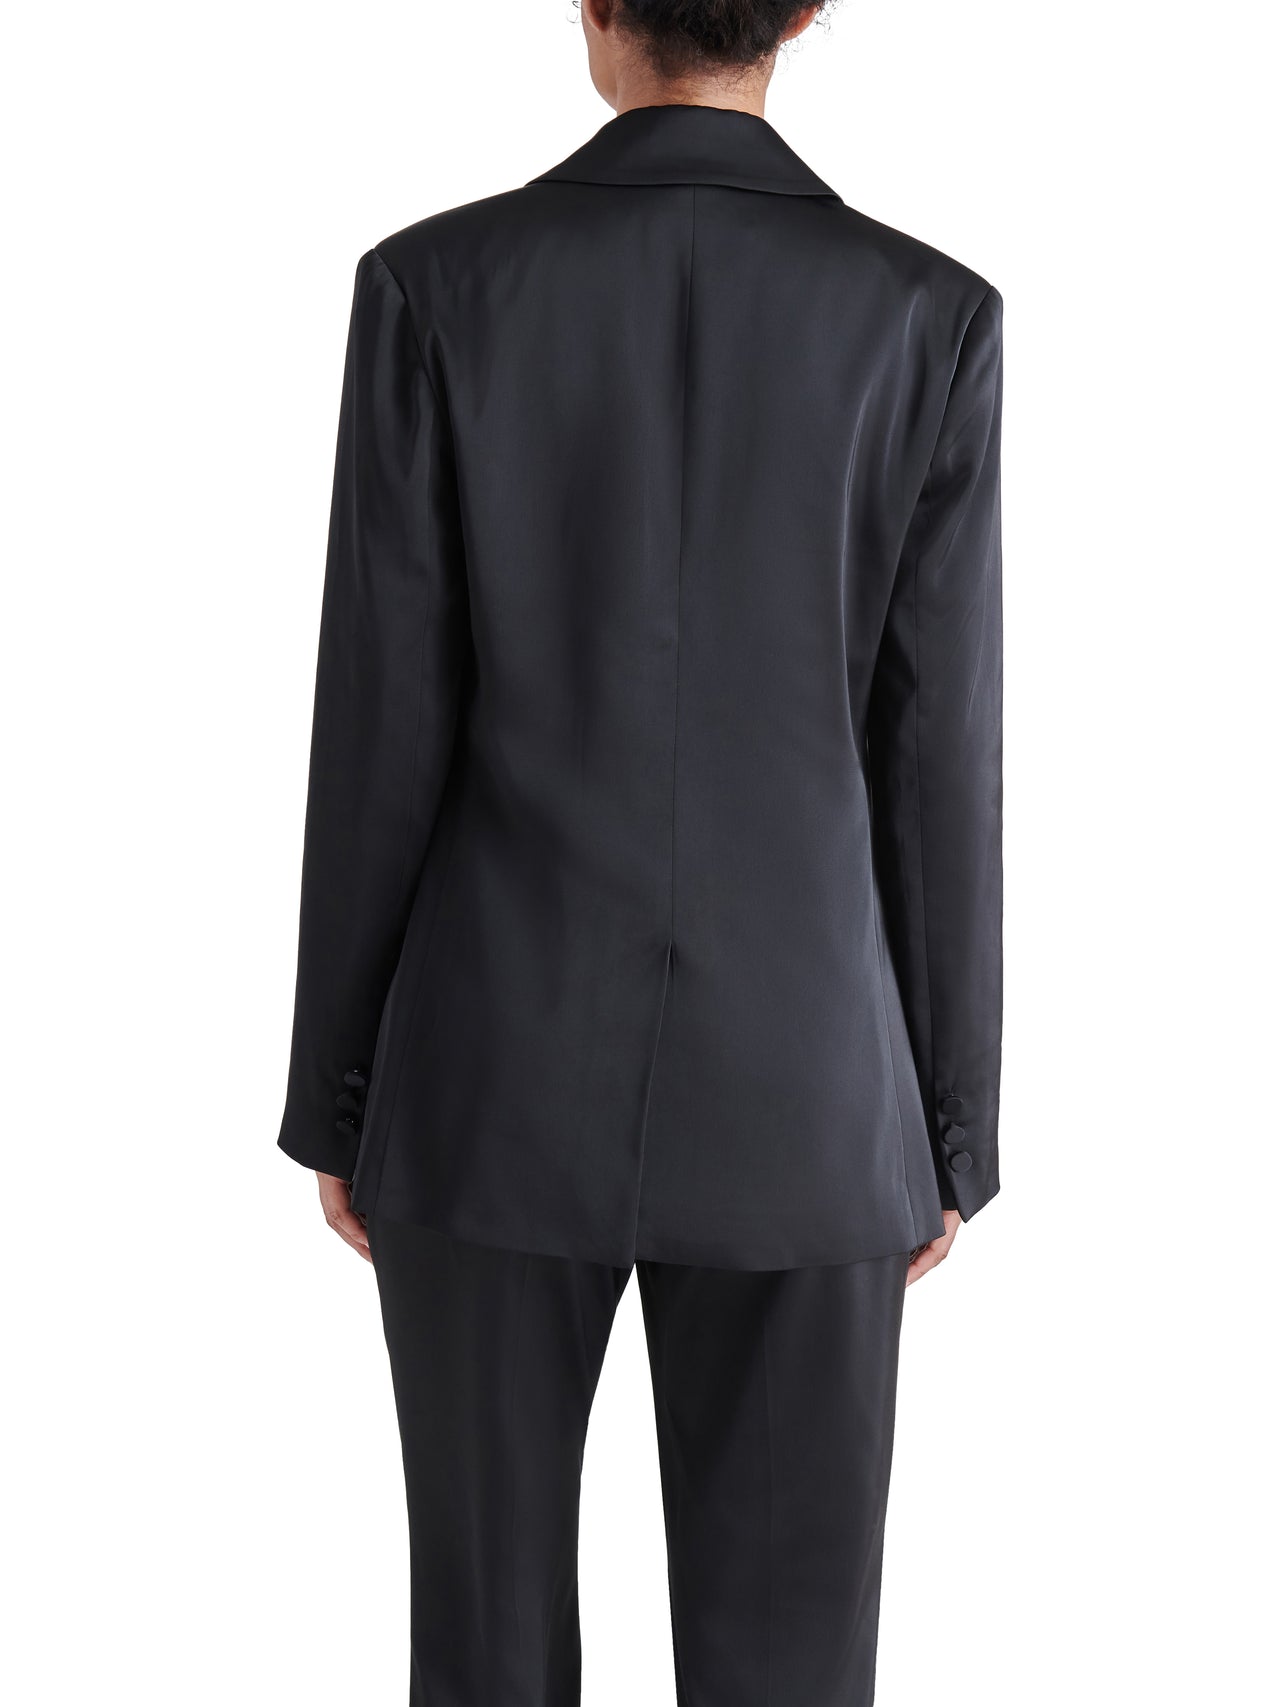 Misha Black Satin Blazer, Jacket by Steve Madden | LIT Boutique